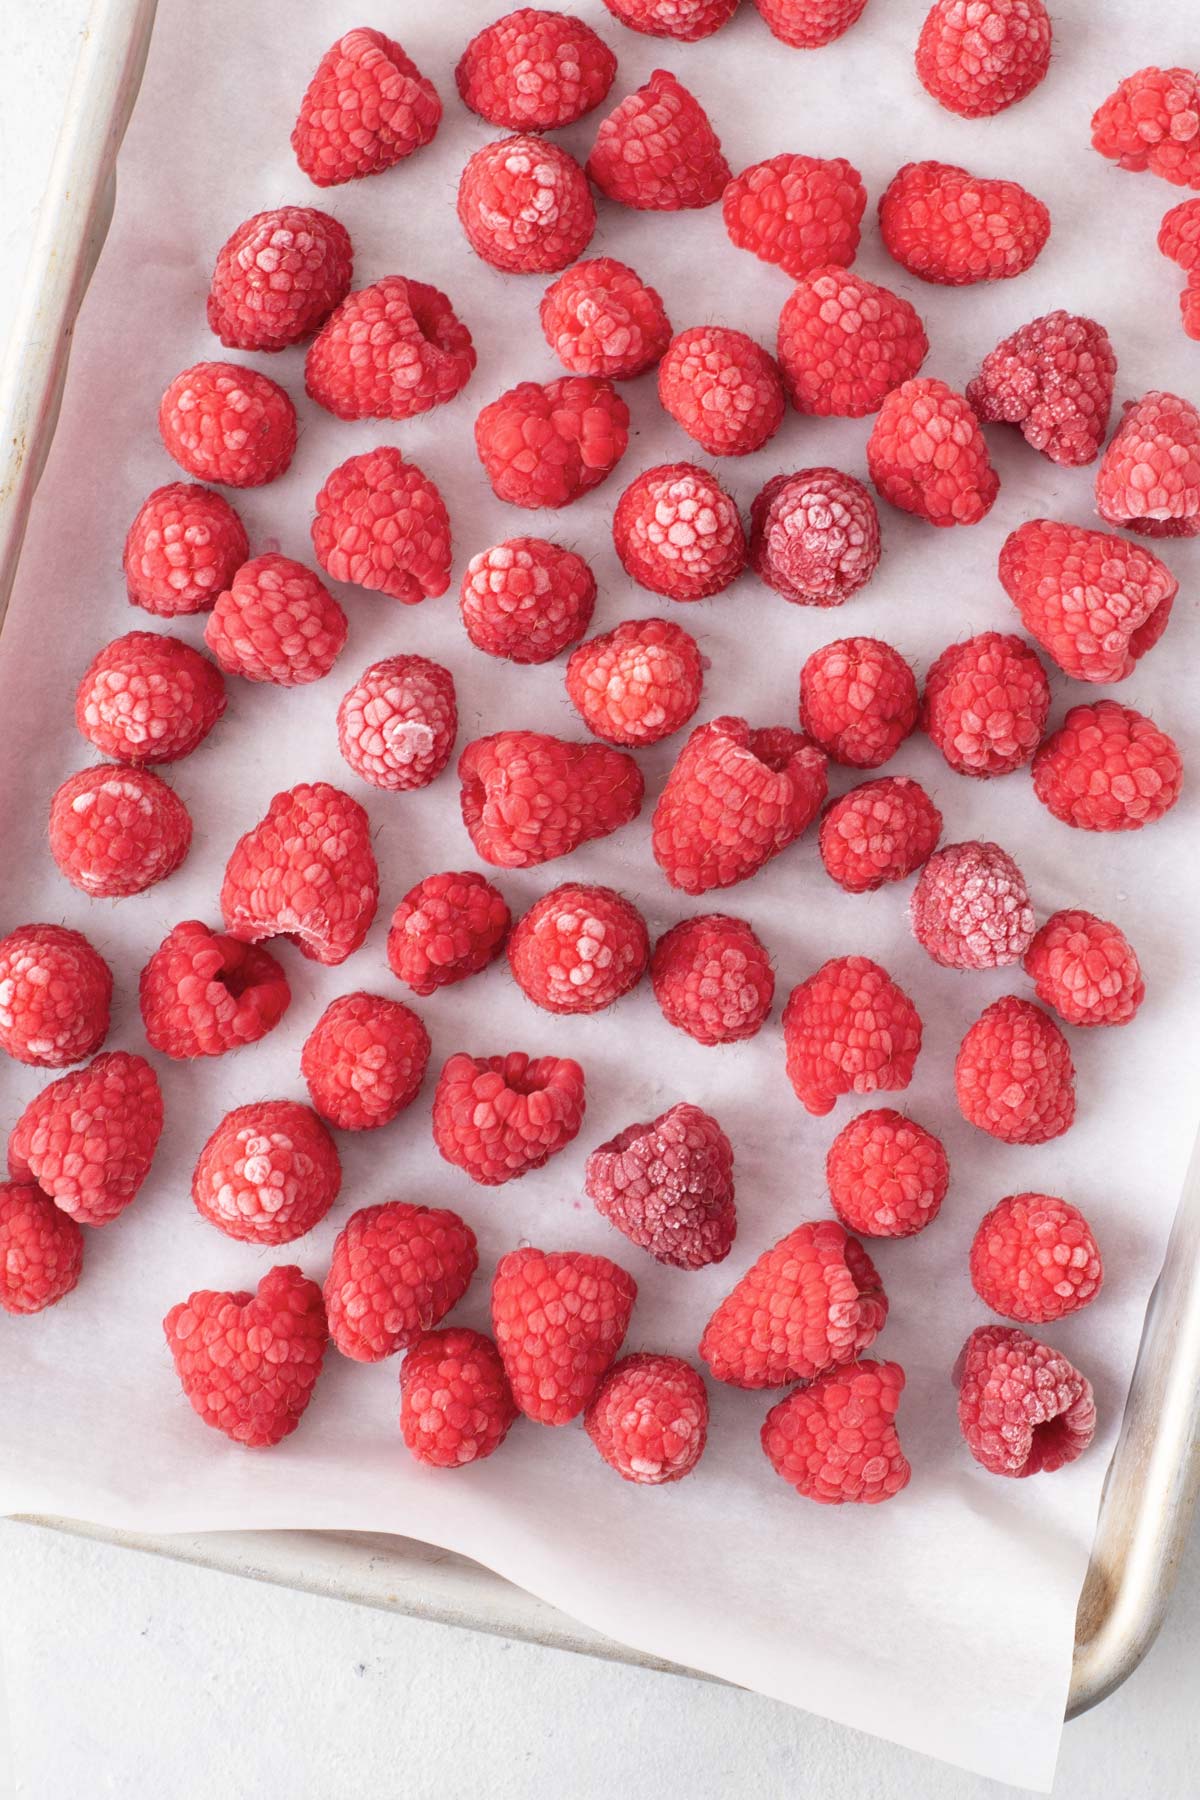 Frozen raspberries on a baking sheet.